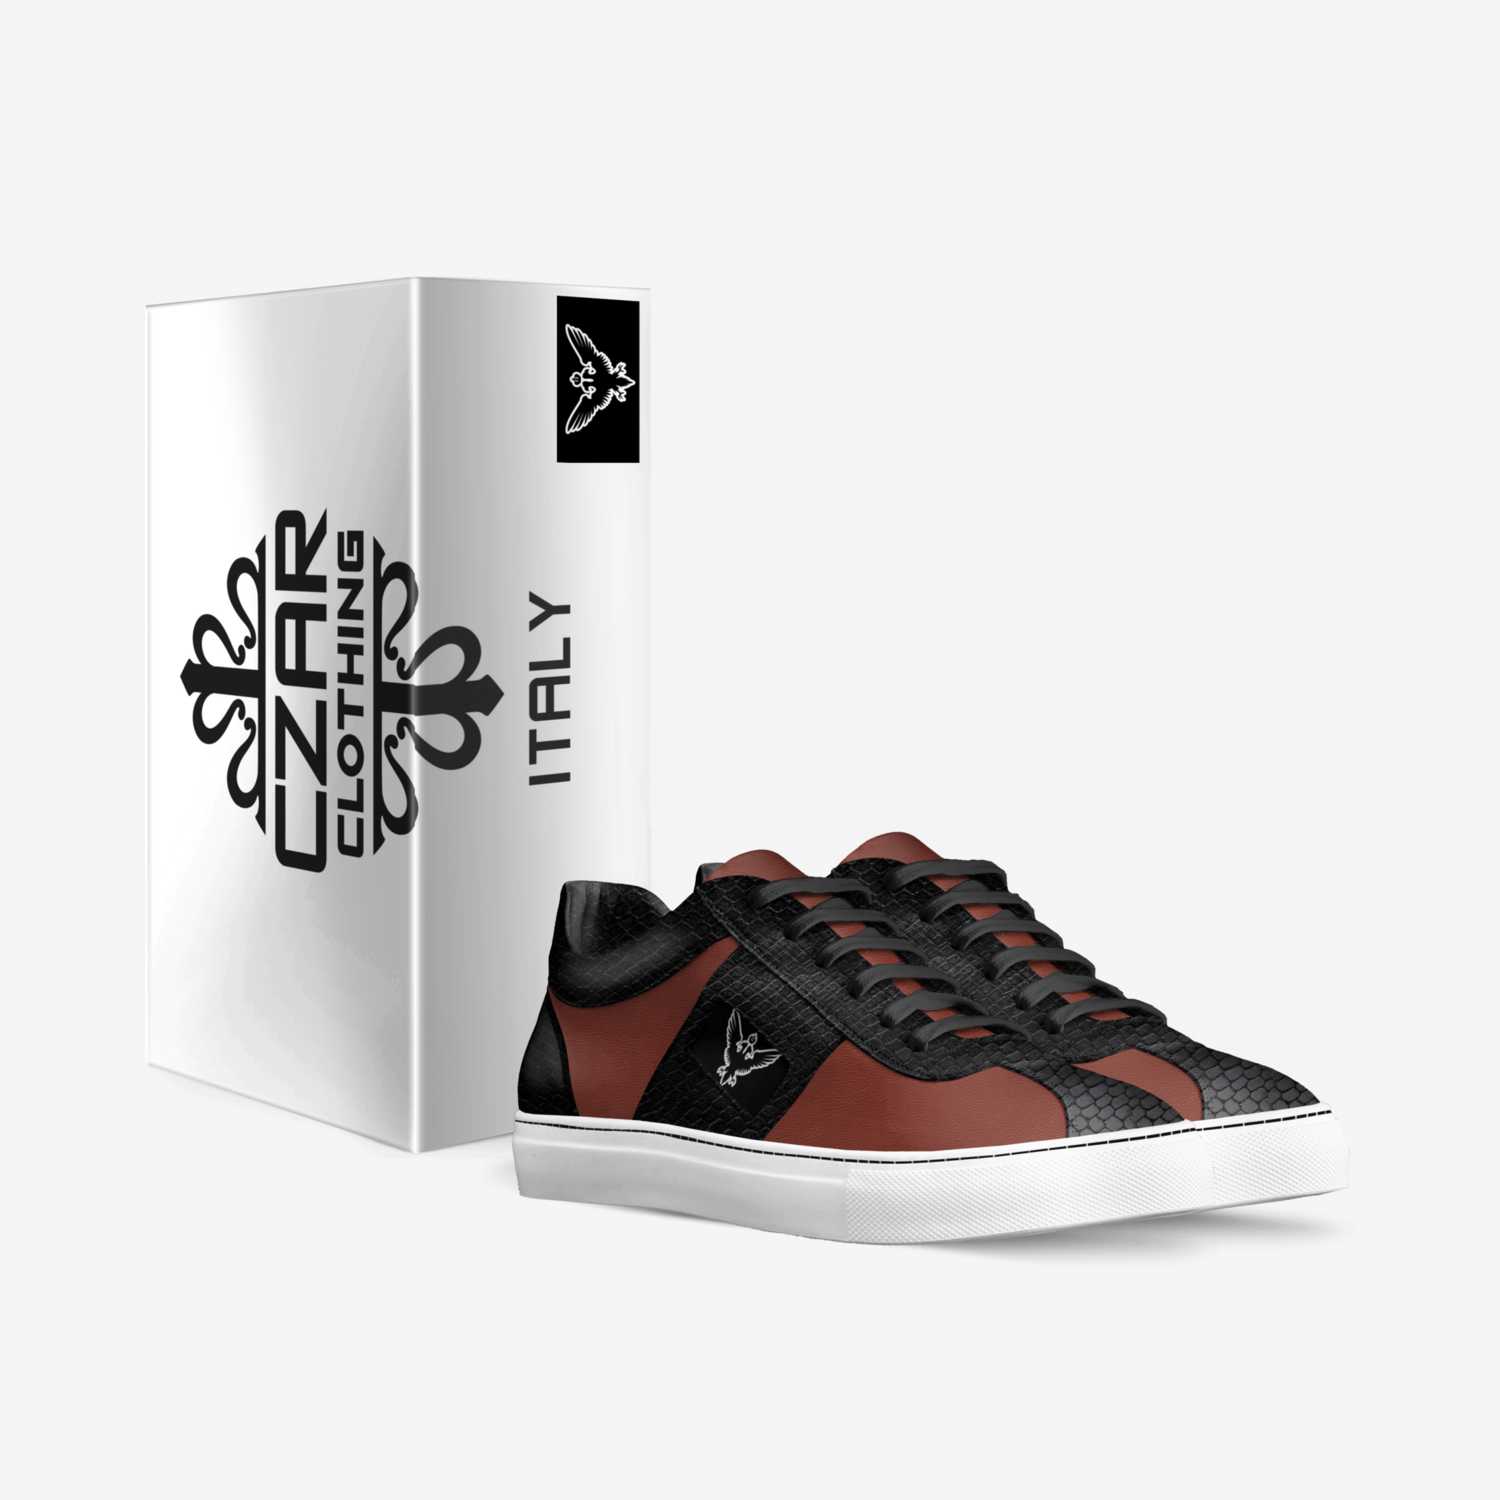 Zar leggendario custom made in Italy shoes by Nicholas Zellem Jr | Box view